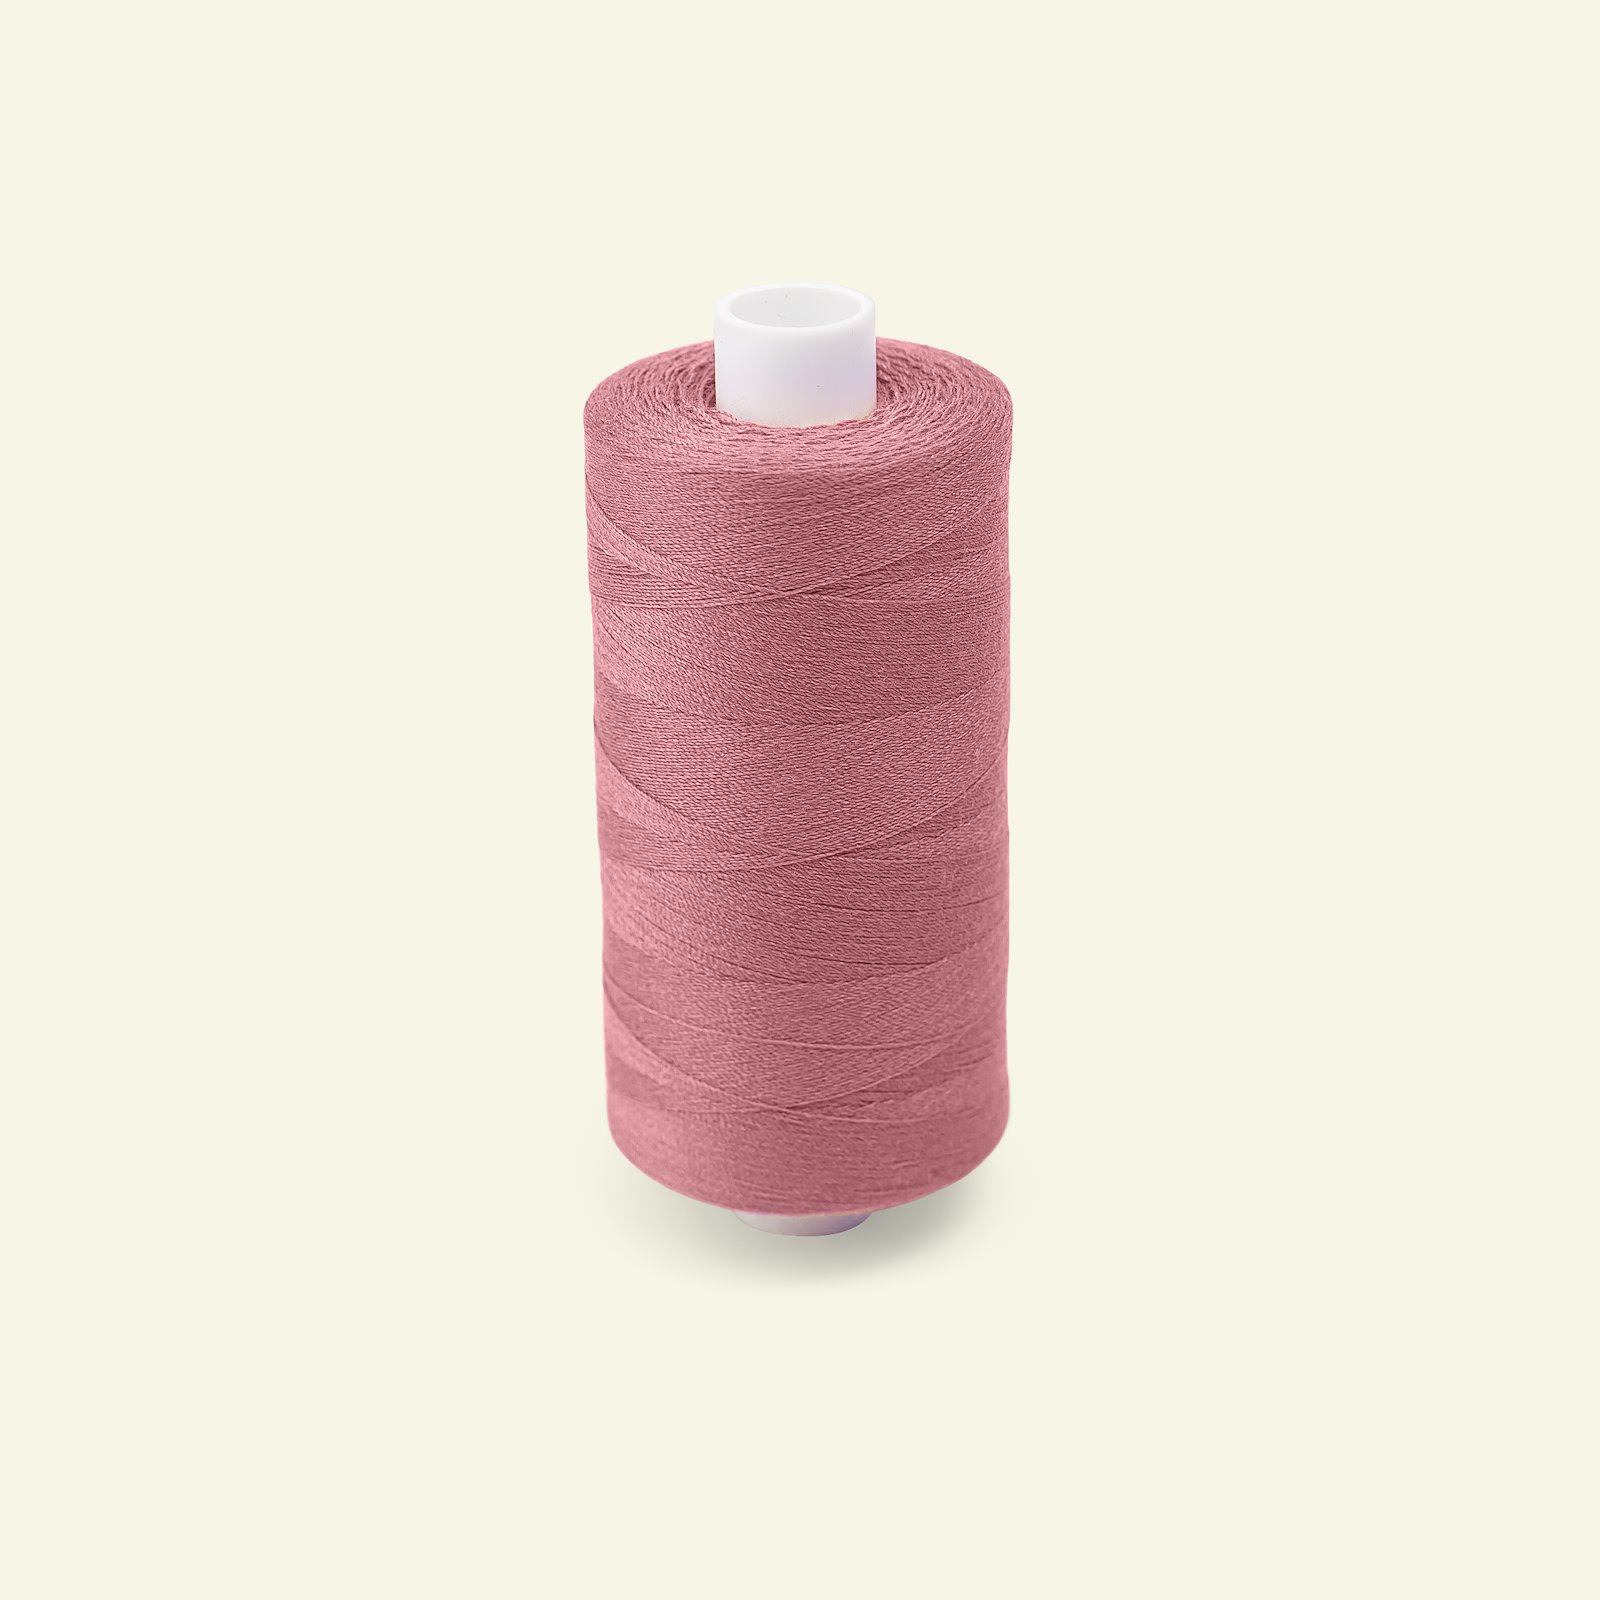 Sewing thread light pink 1000m